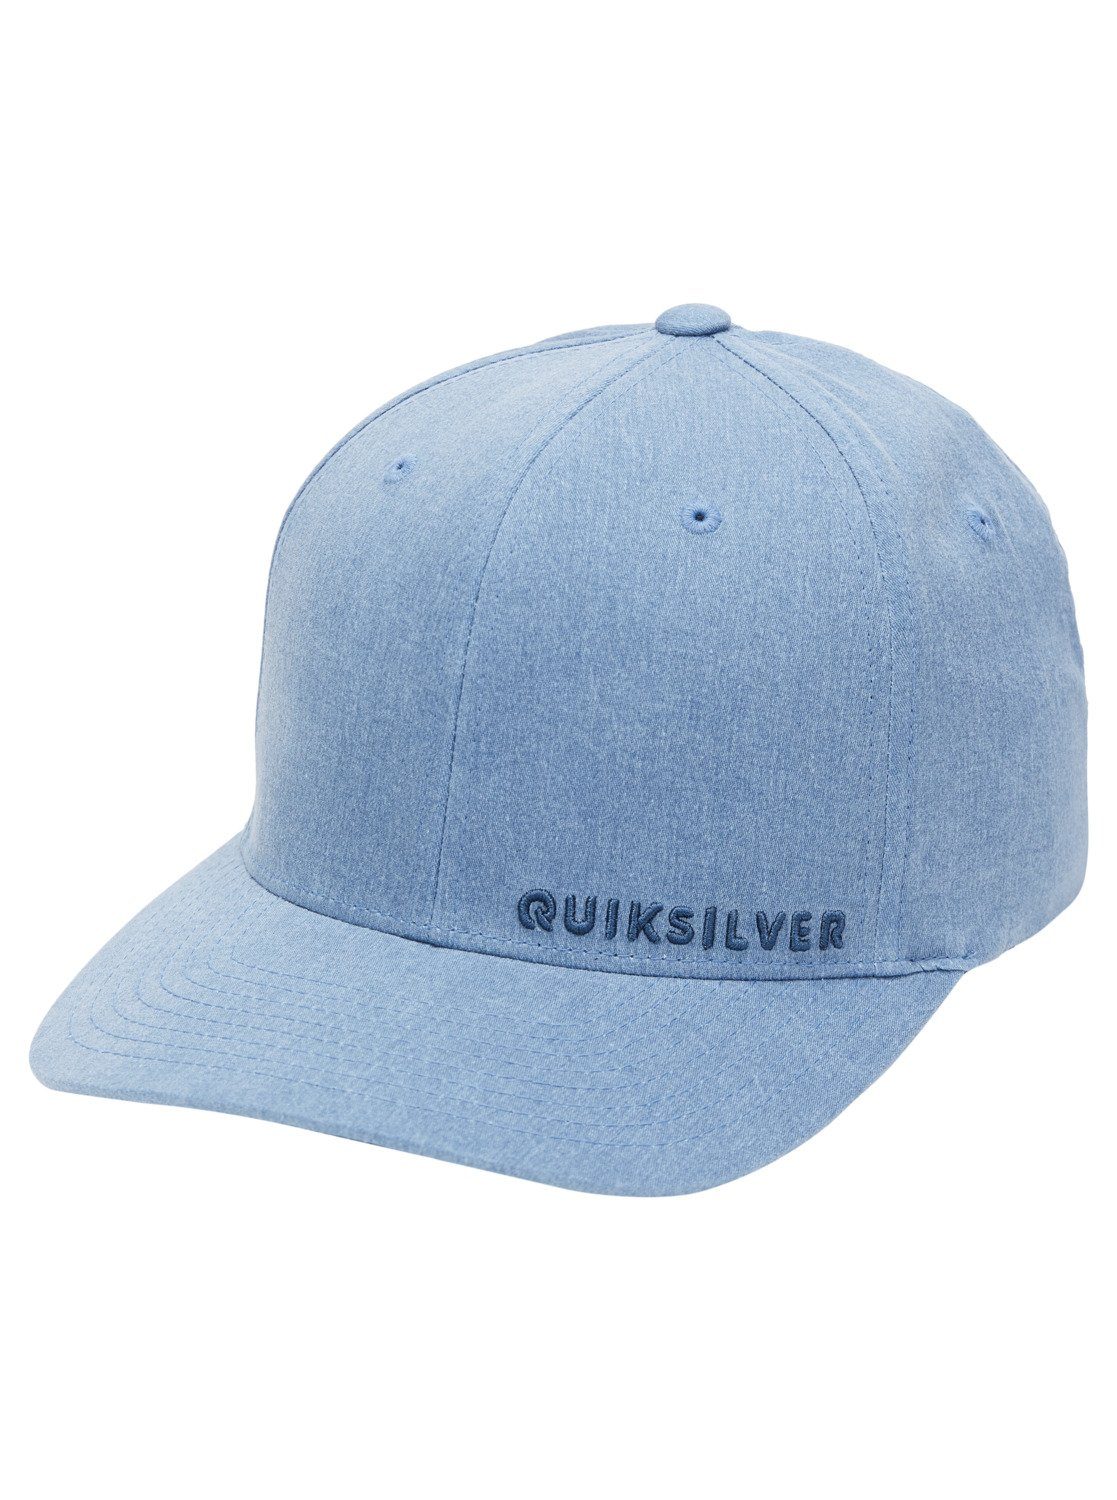 Quiksilver Flex Cap Sidestay Navy Blazer